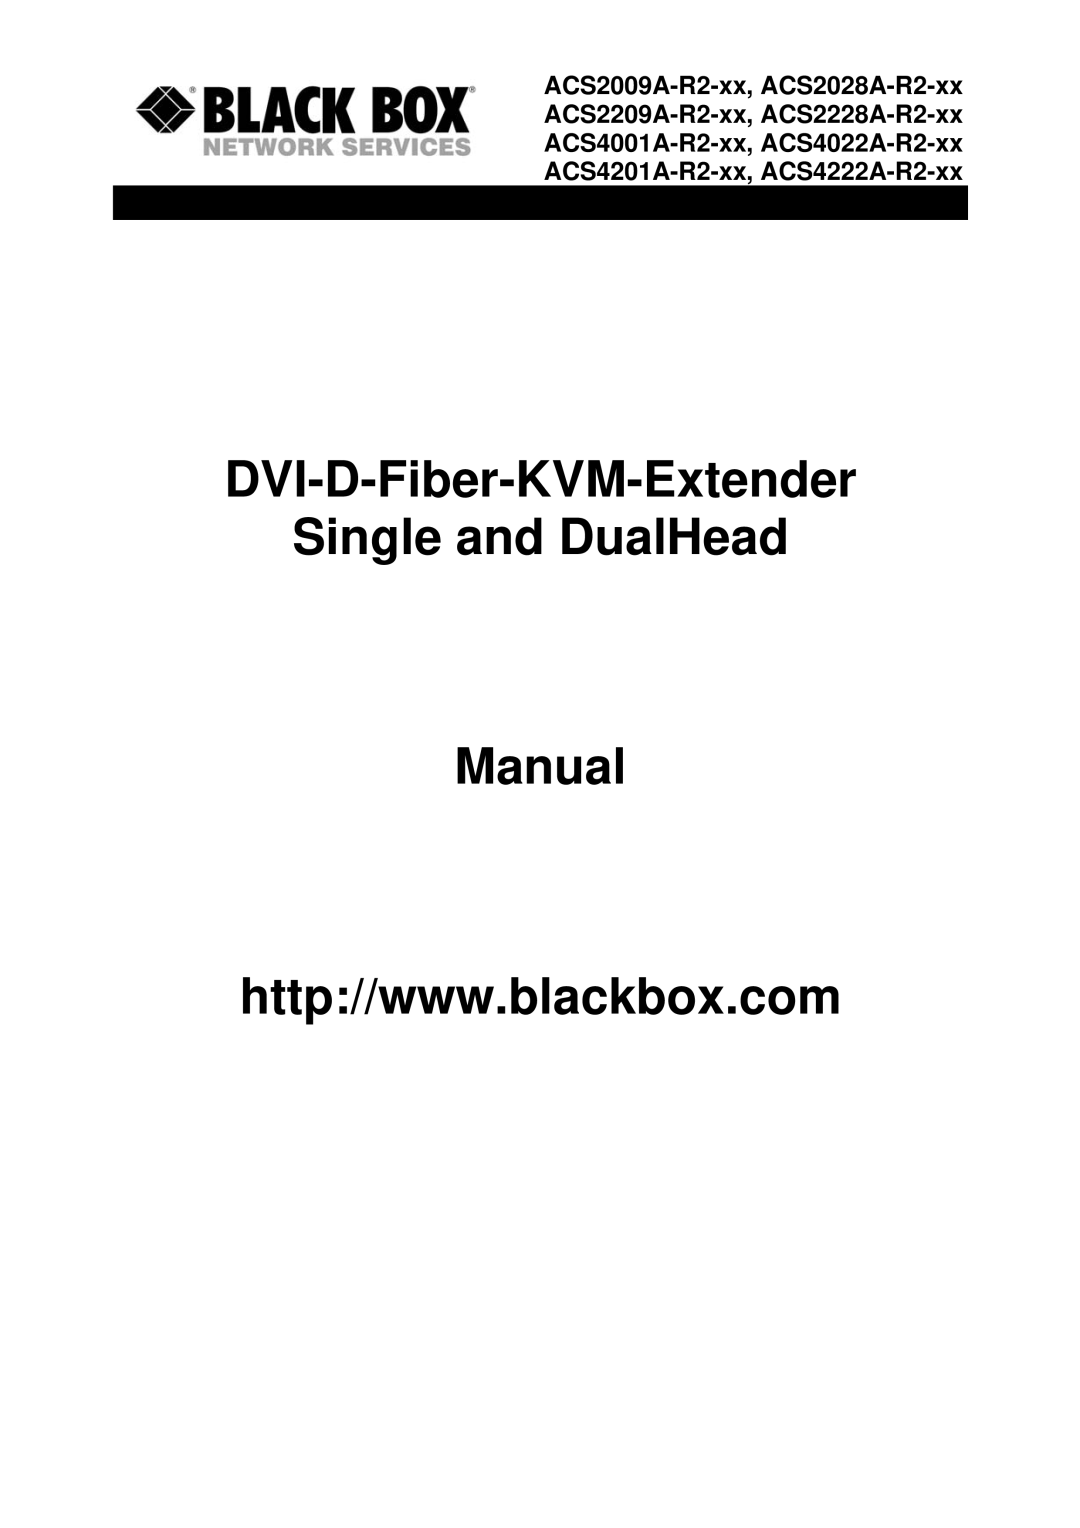 Black Box ACS4222A-R2-xx, ACS2009A-R2-xx manual DVI-D-Fiber-KVM-Extender Single and DualHead Manual 